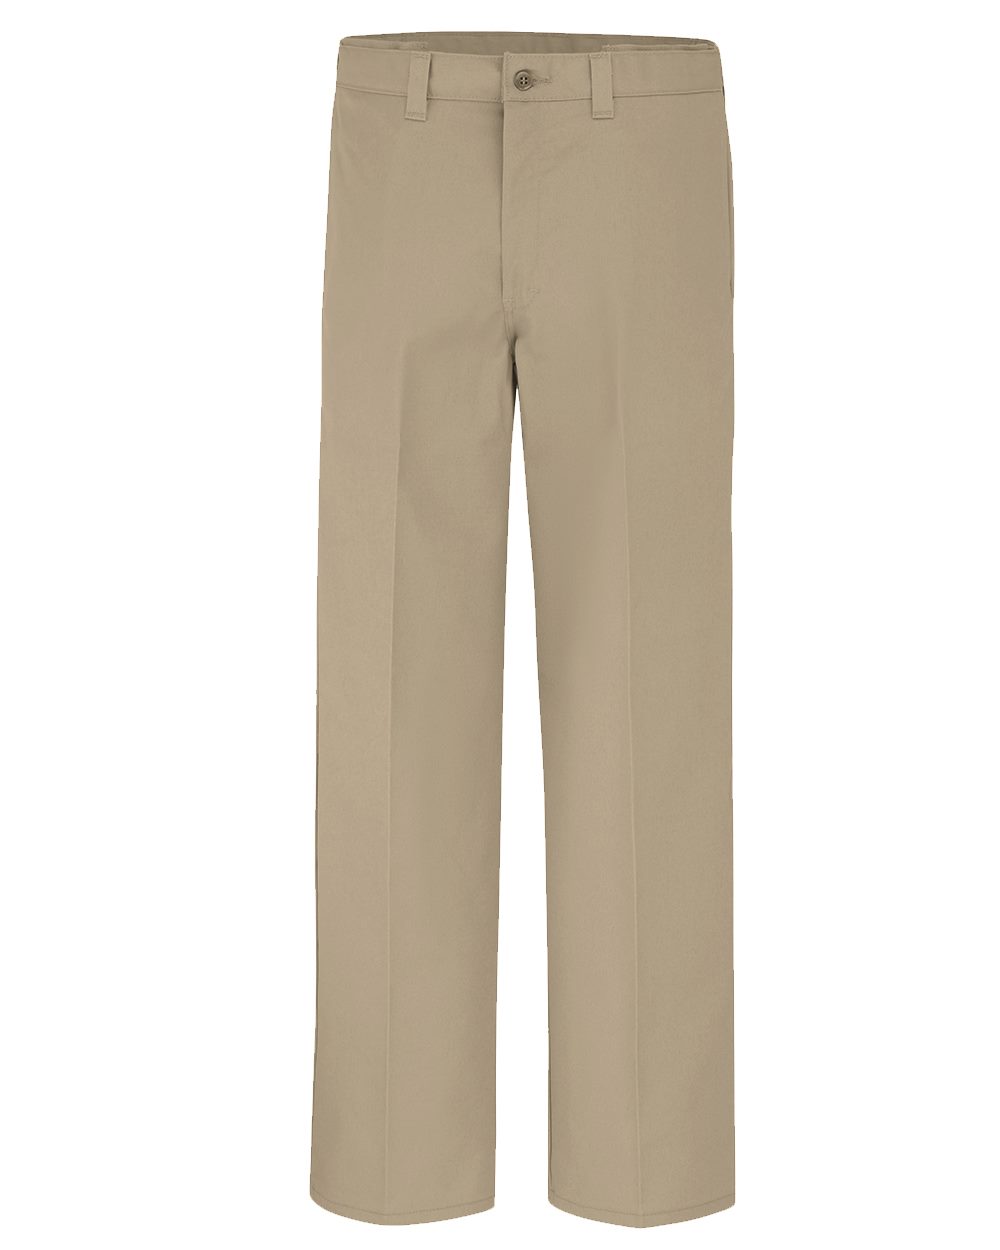 Dickies LP17ODD - Industrial Flat Front Comfort Waist Pants - Odd Sizes